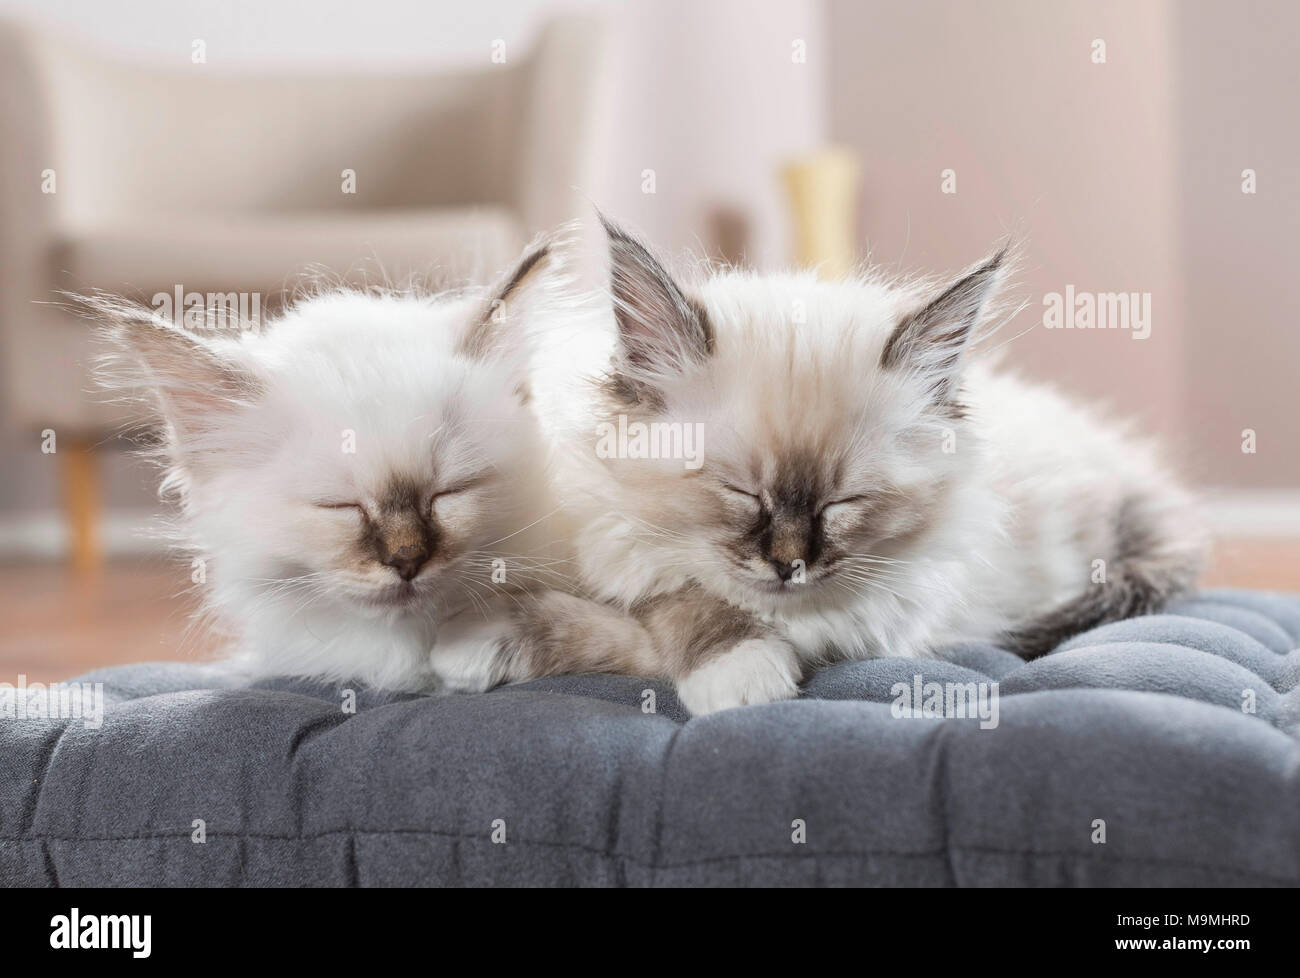 Sacred cat of Burma. Two kittens sleeping on a cushion. Germany Stock Photo